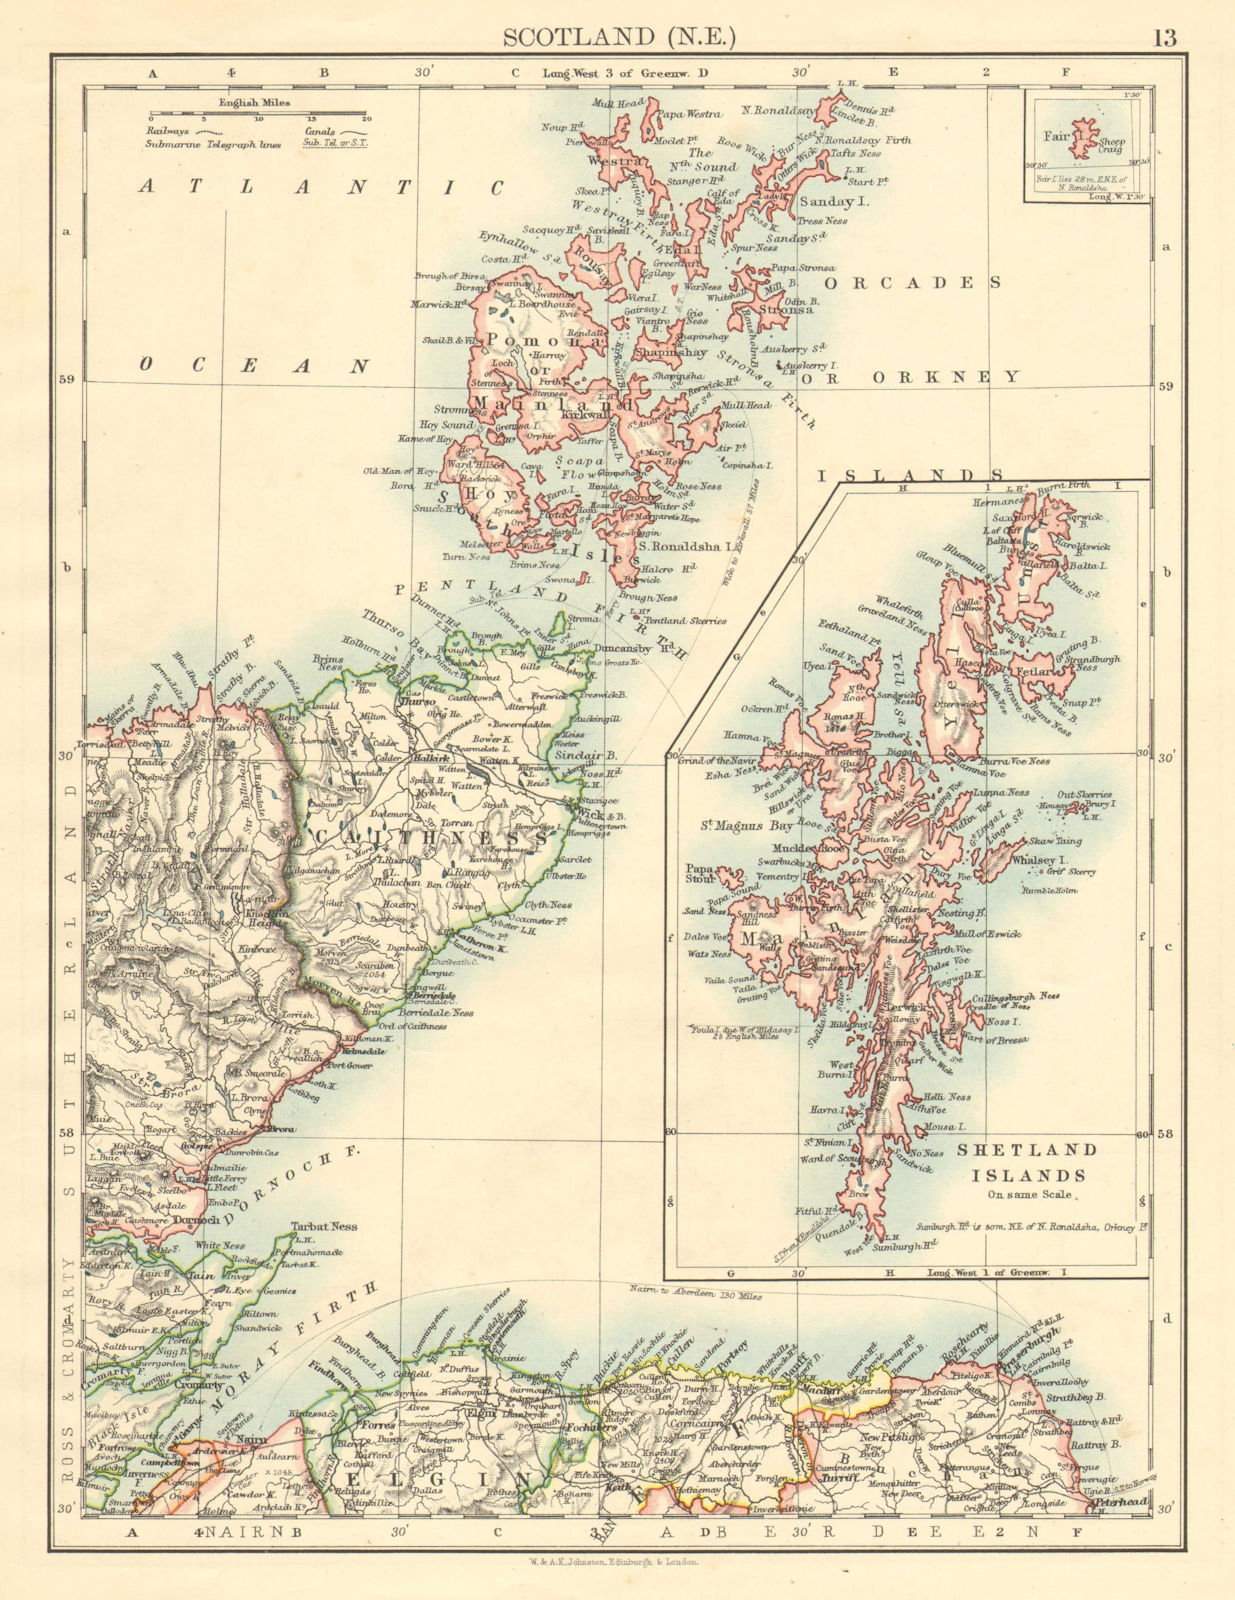 MORAY FIRTH. Caithness Elgin Shetlands Orkneys. Scotland. JOHNSTON 1899 map